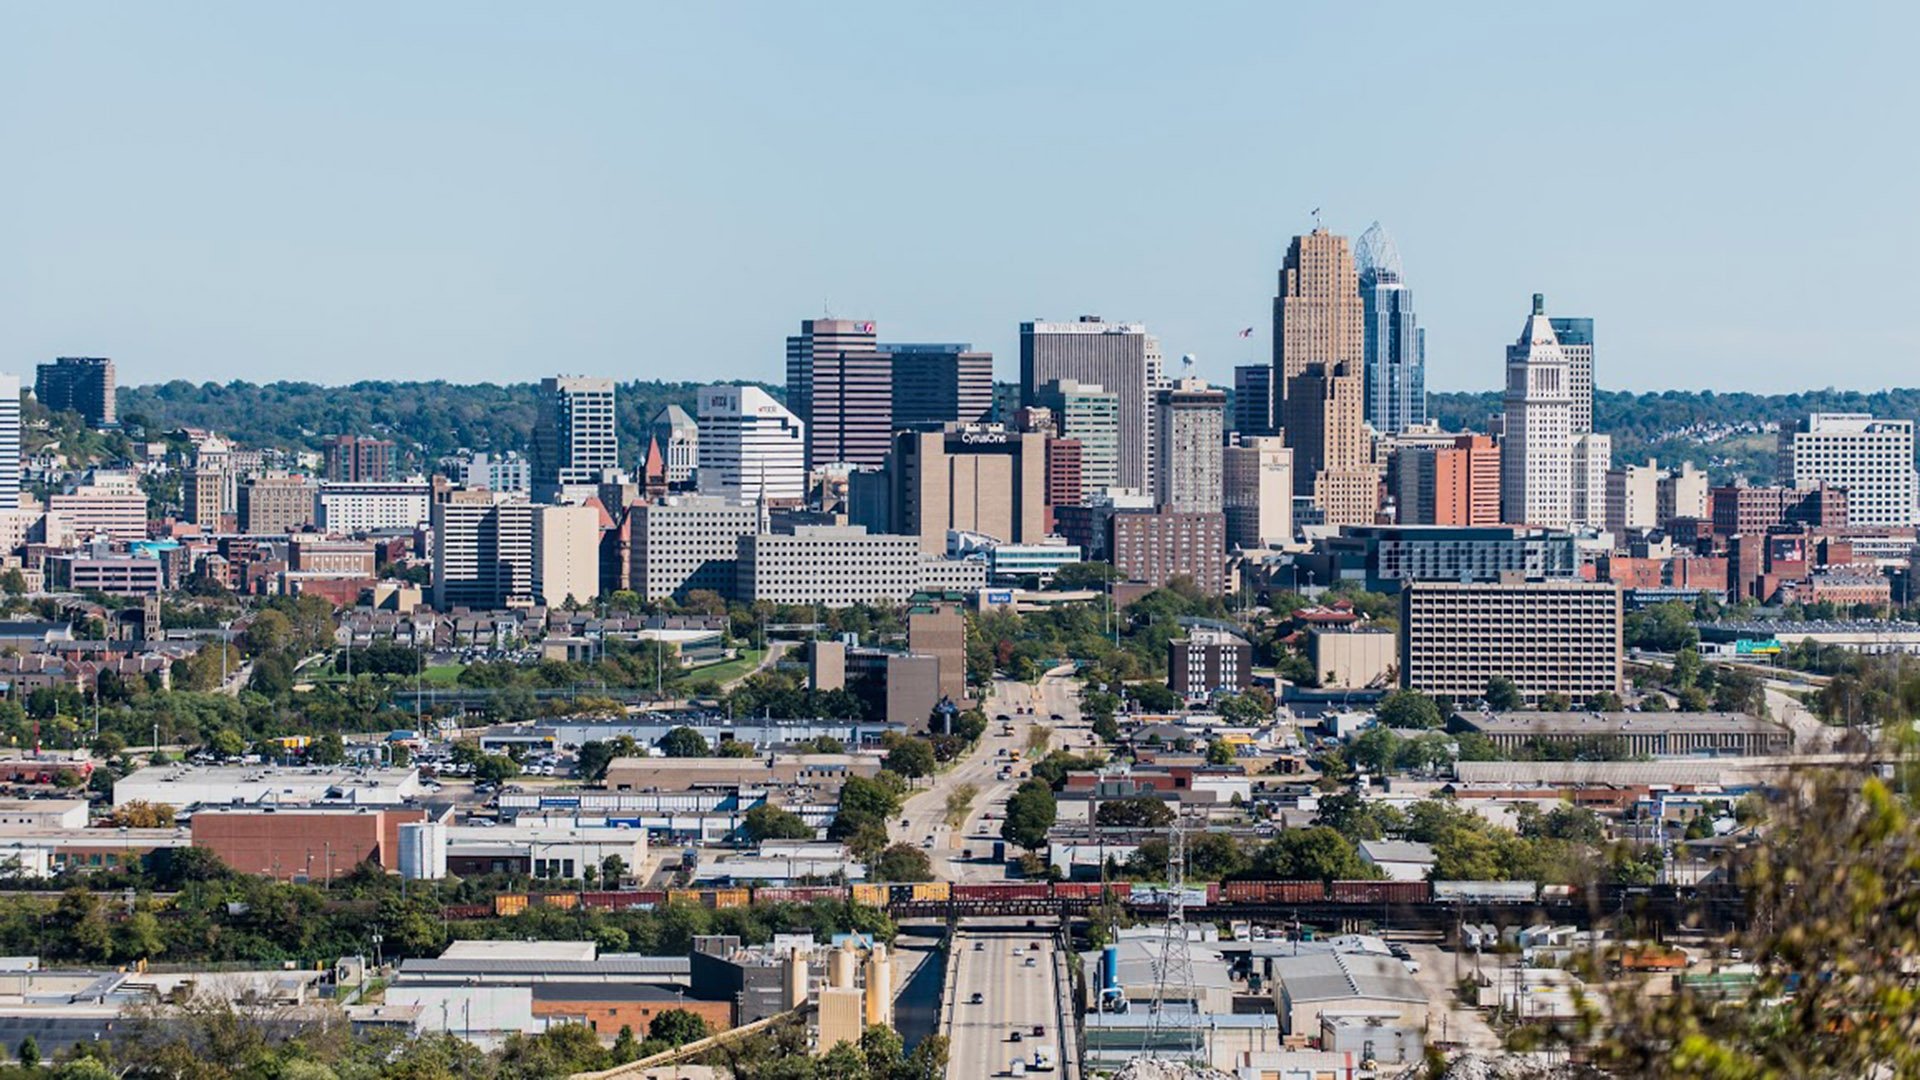 Skyline of Downtown Cincinnati. Credit: Louis Rideout